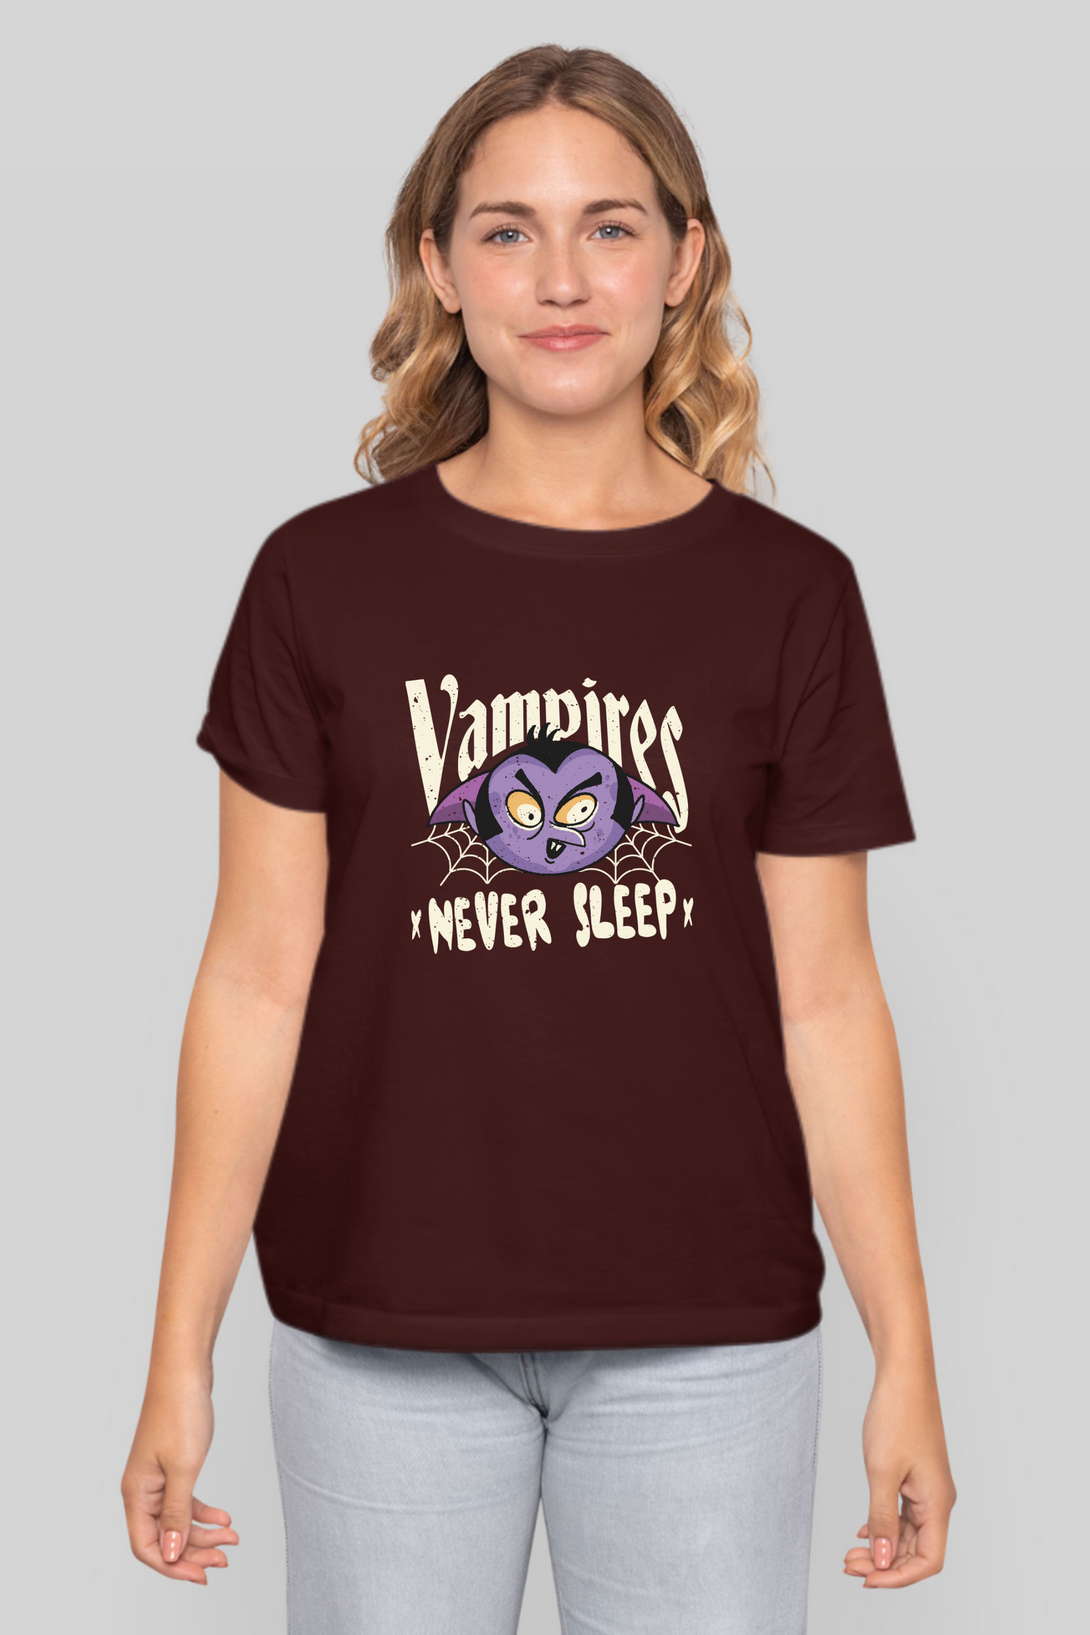 Vampires Never Sleep Printed T-Shirt For Women - WowWaves - 10